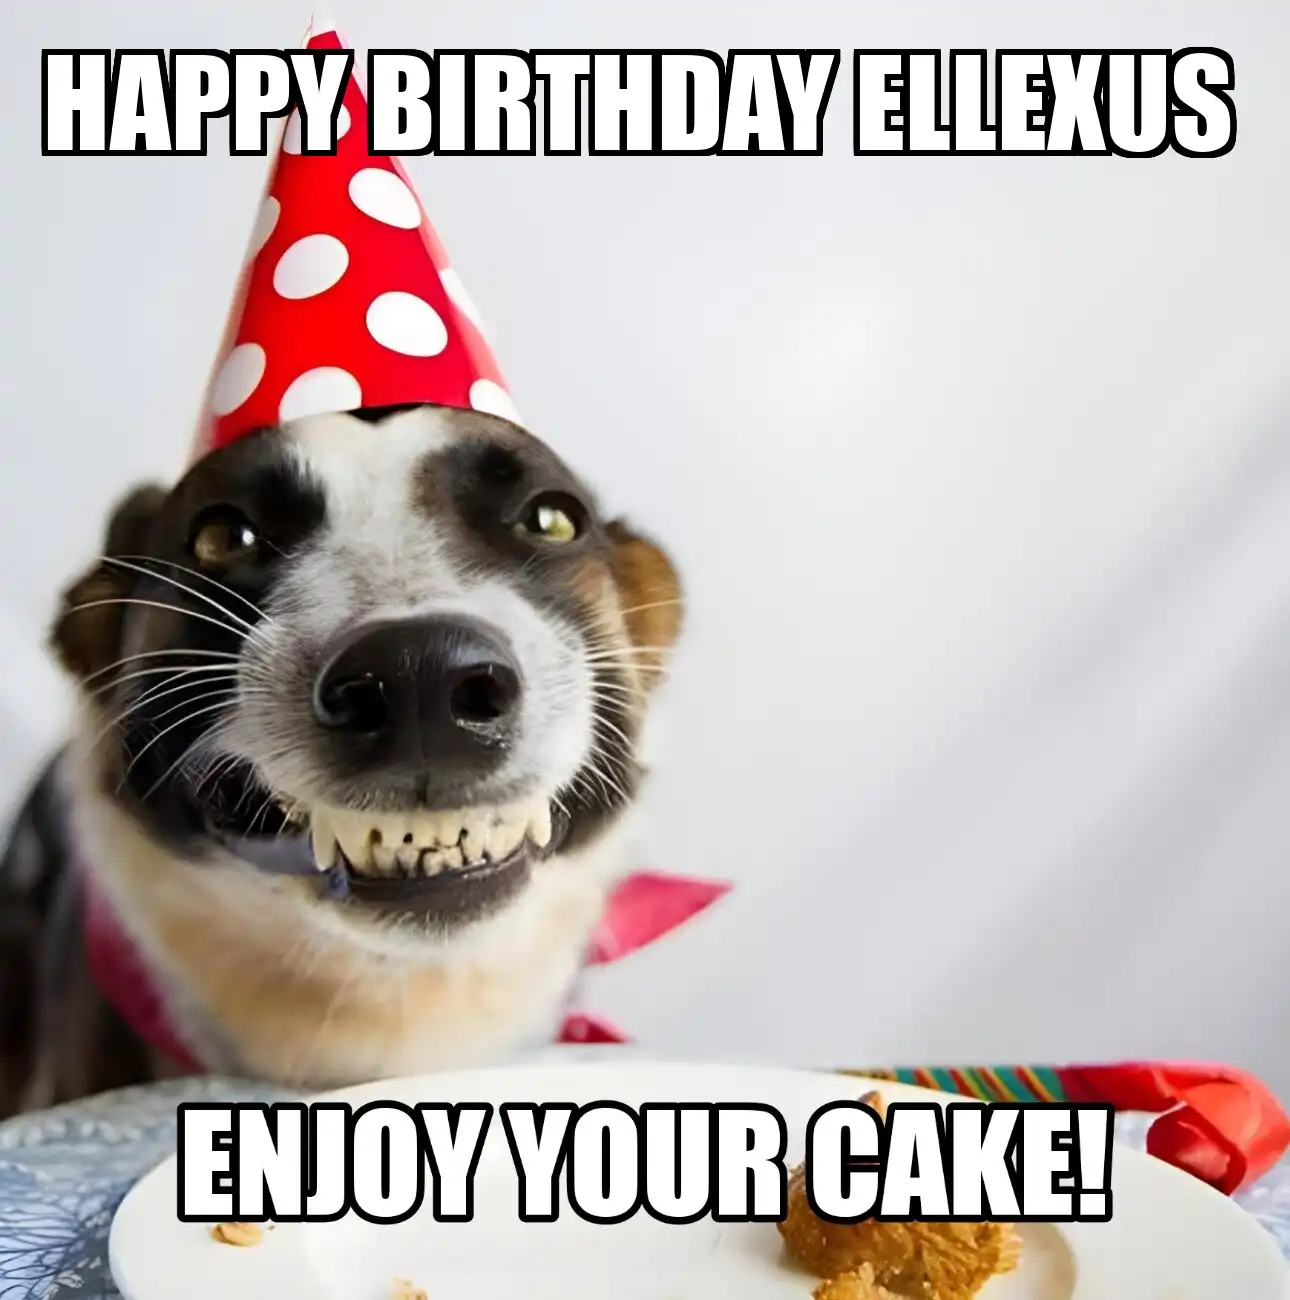 Happy Birthday Ellexus Enjoy Your Cake Dog Meme